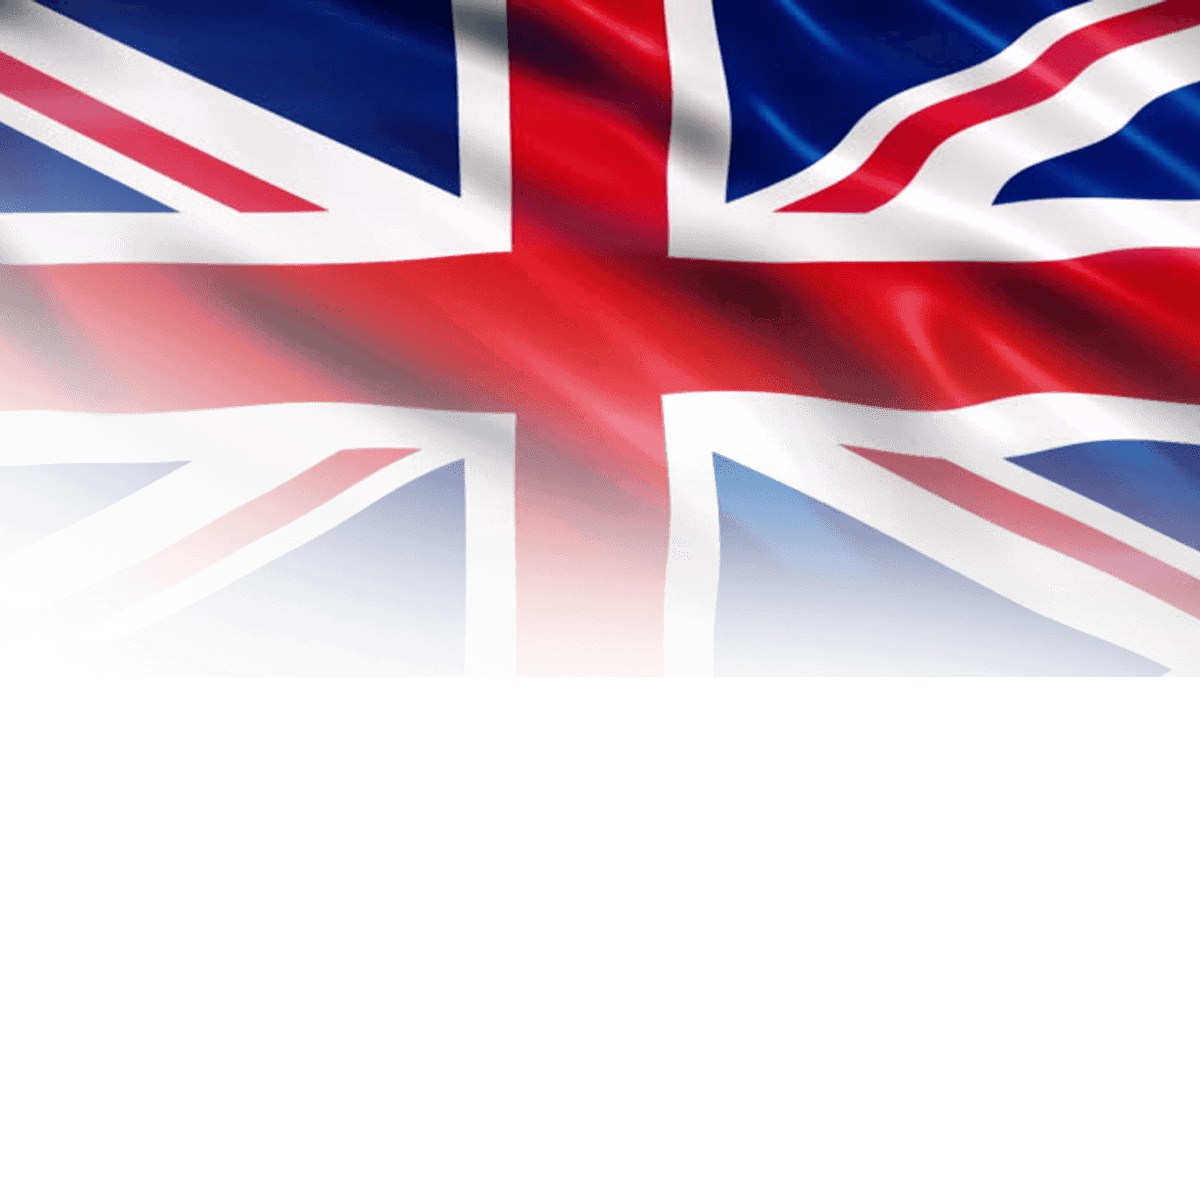 https://myscs.org/wp-content/uploads/2021/06/UK-Flag-Box.png